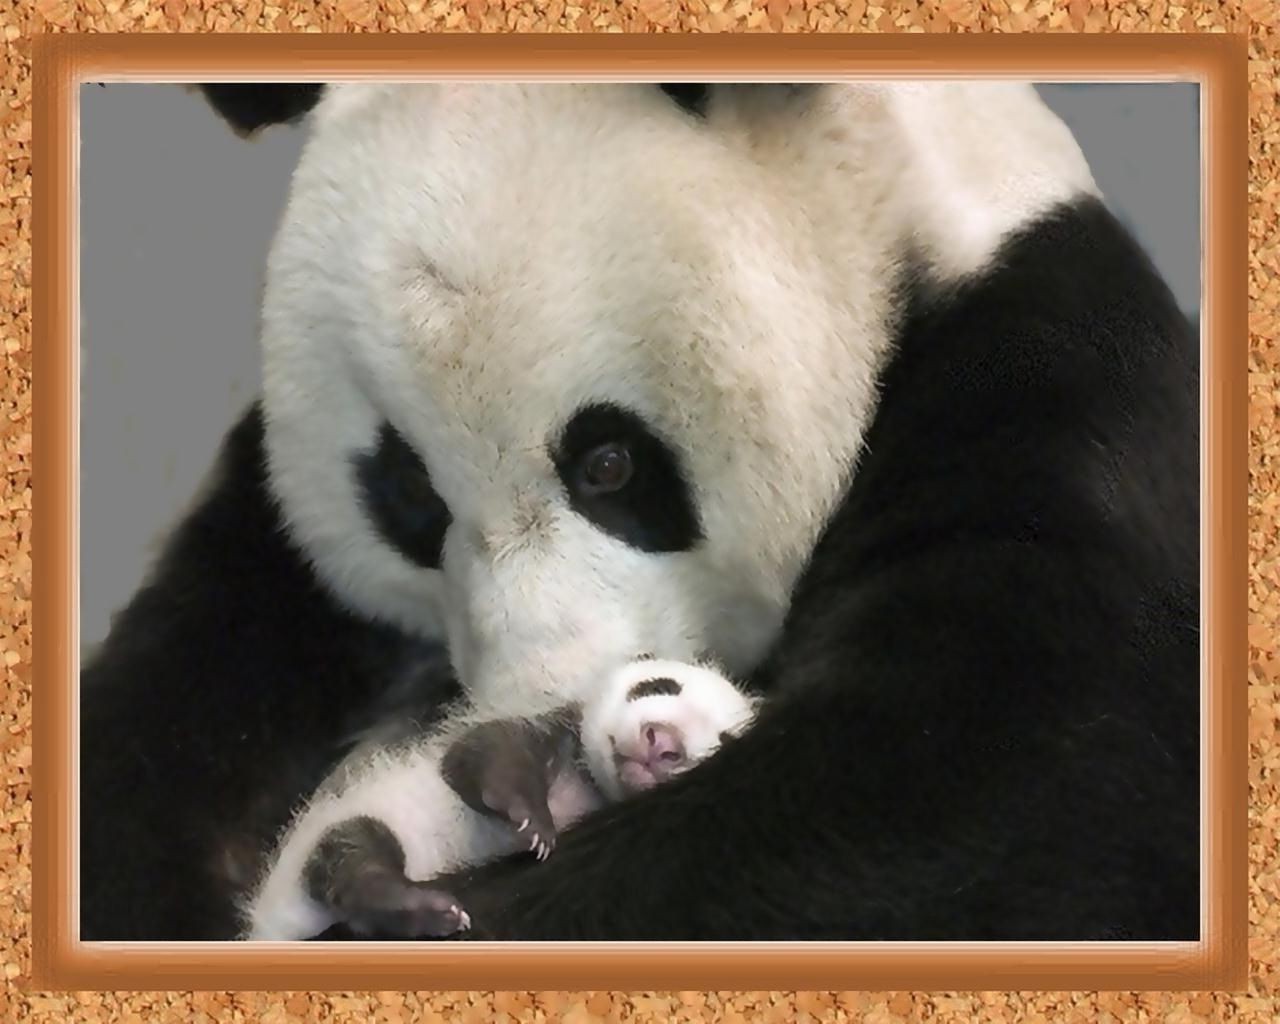 herbivores animal cute mammal panda portrait wildlife nature frosty fur looking baby young sit eye